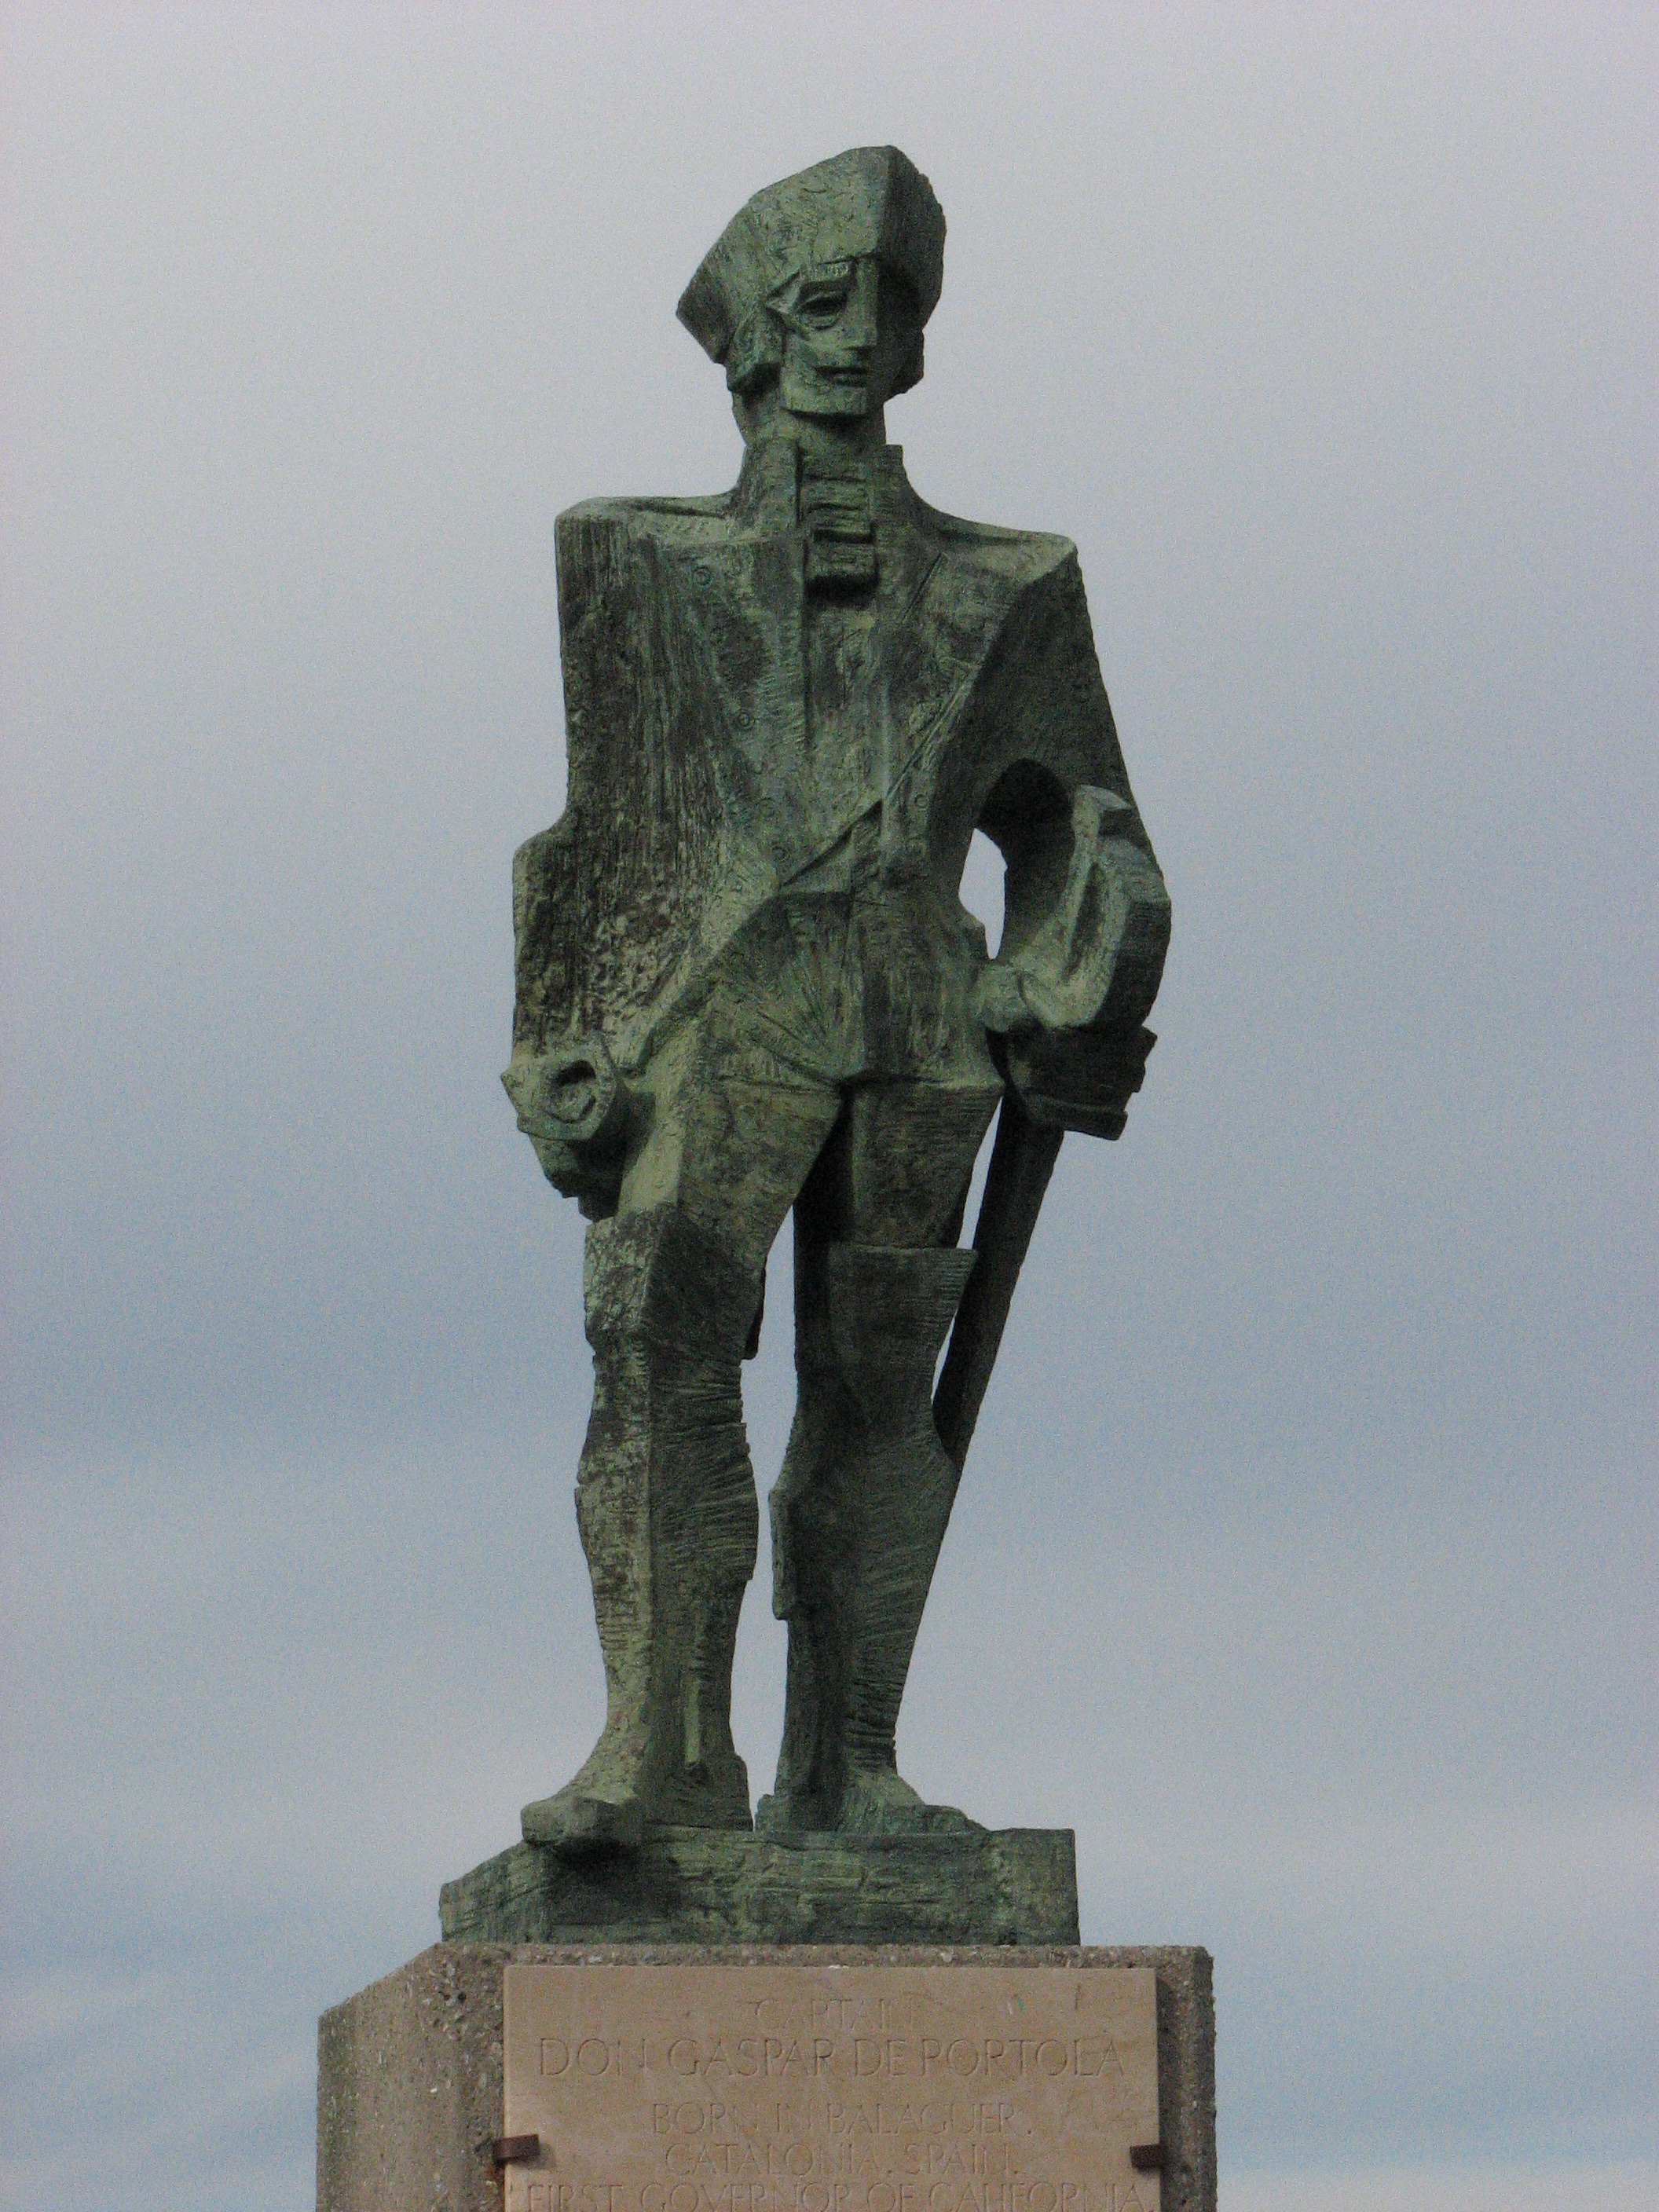 Statue of Gaspar de Portolà (by: Flickr user Bob n' Renee)